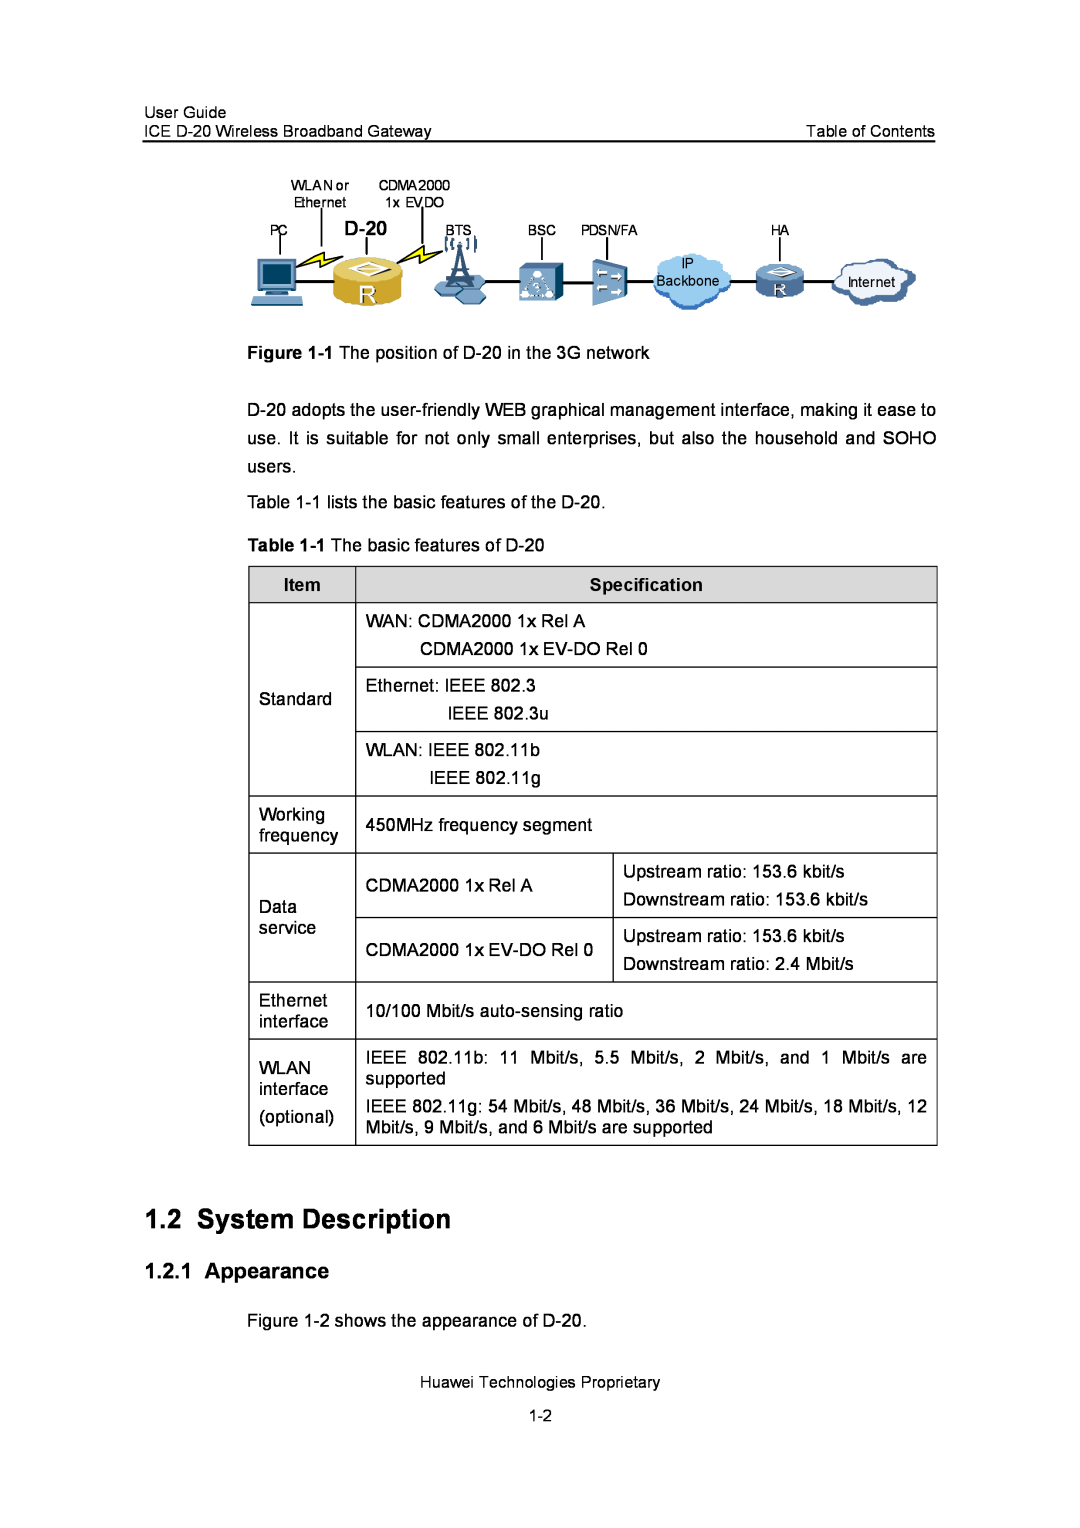 Insignia ICE D-20 EC506 manual System Description, Appearance, Specification 